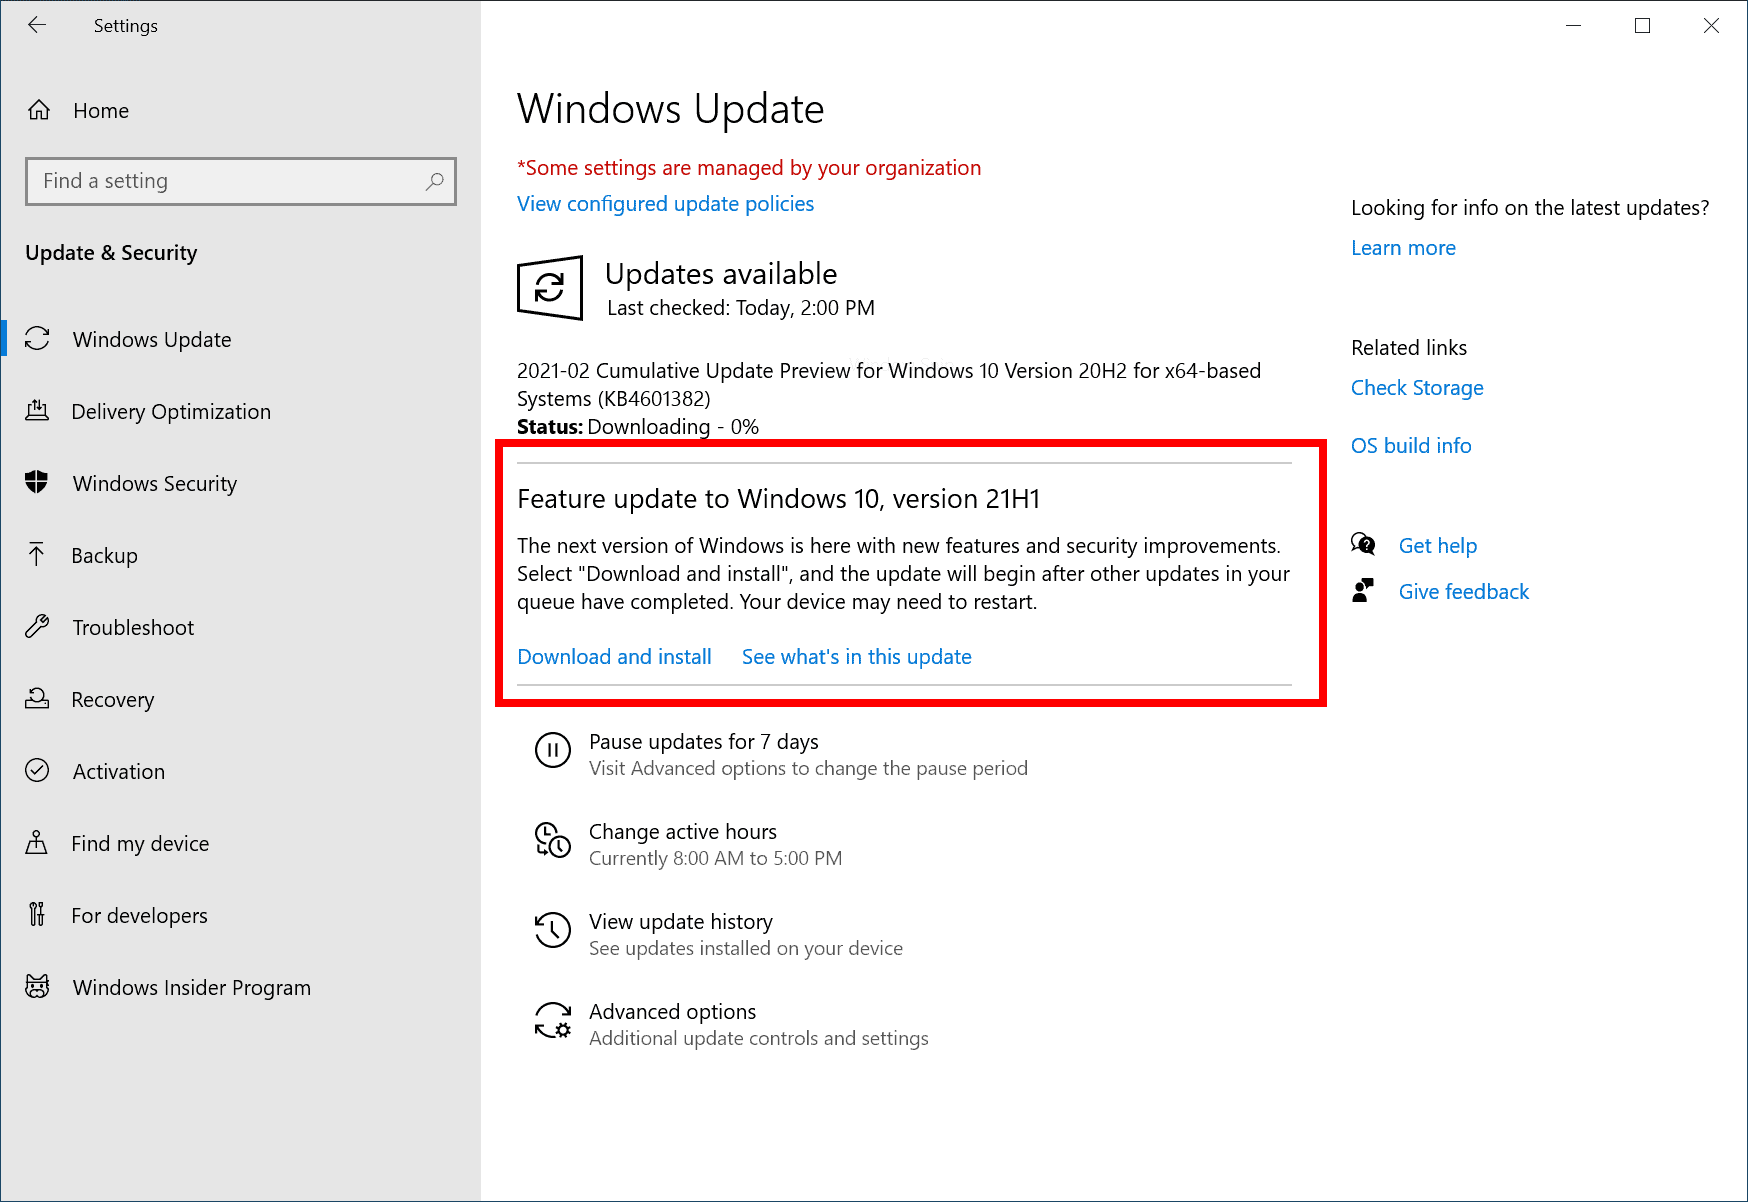 Microsoft Formally Announces Windows 10 21H1 - 32